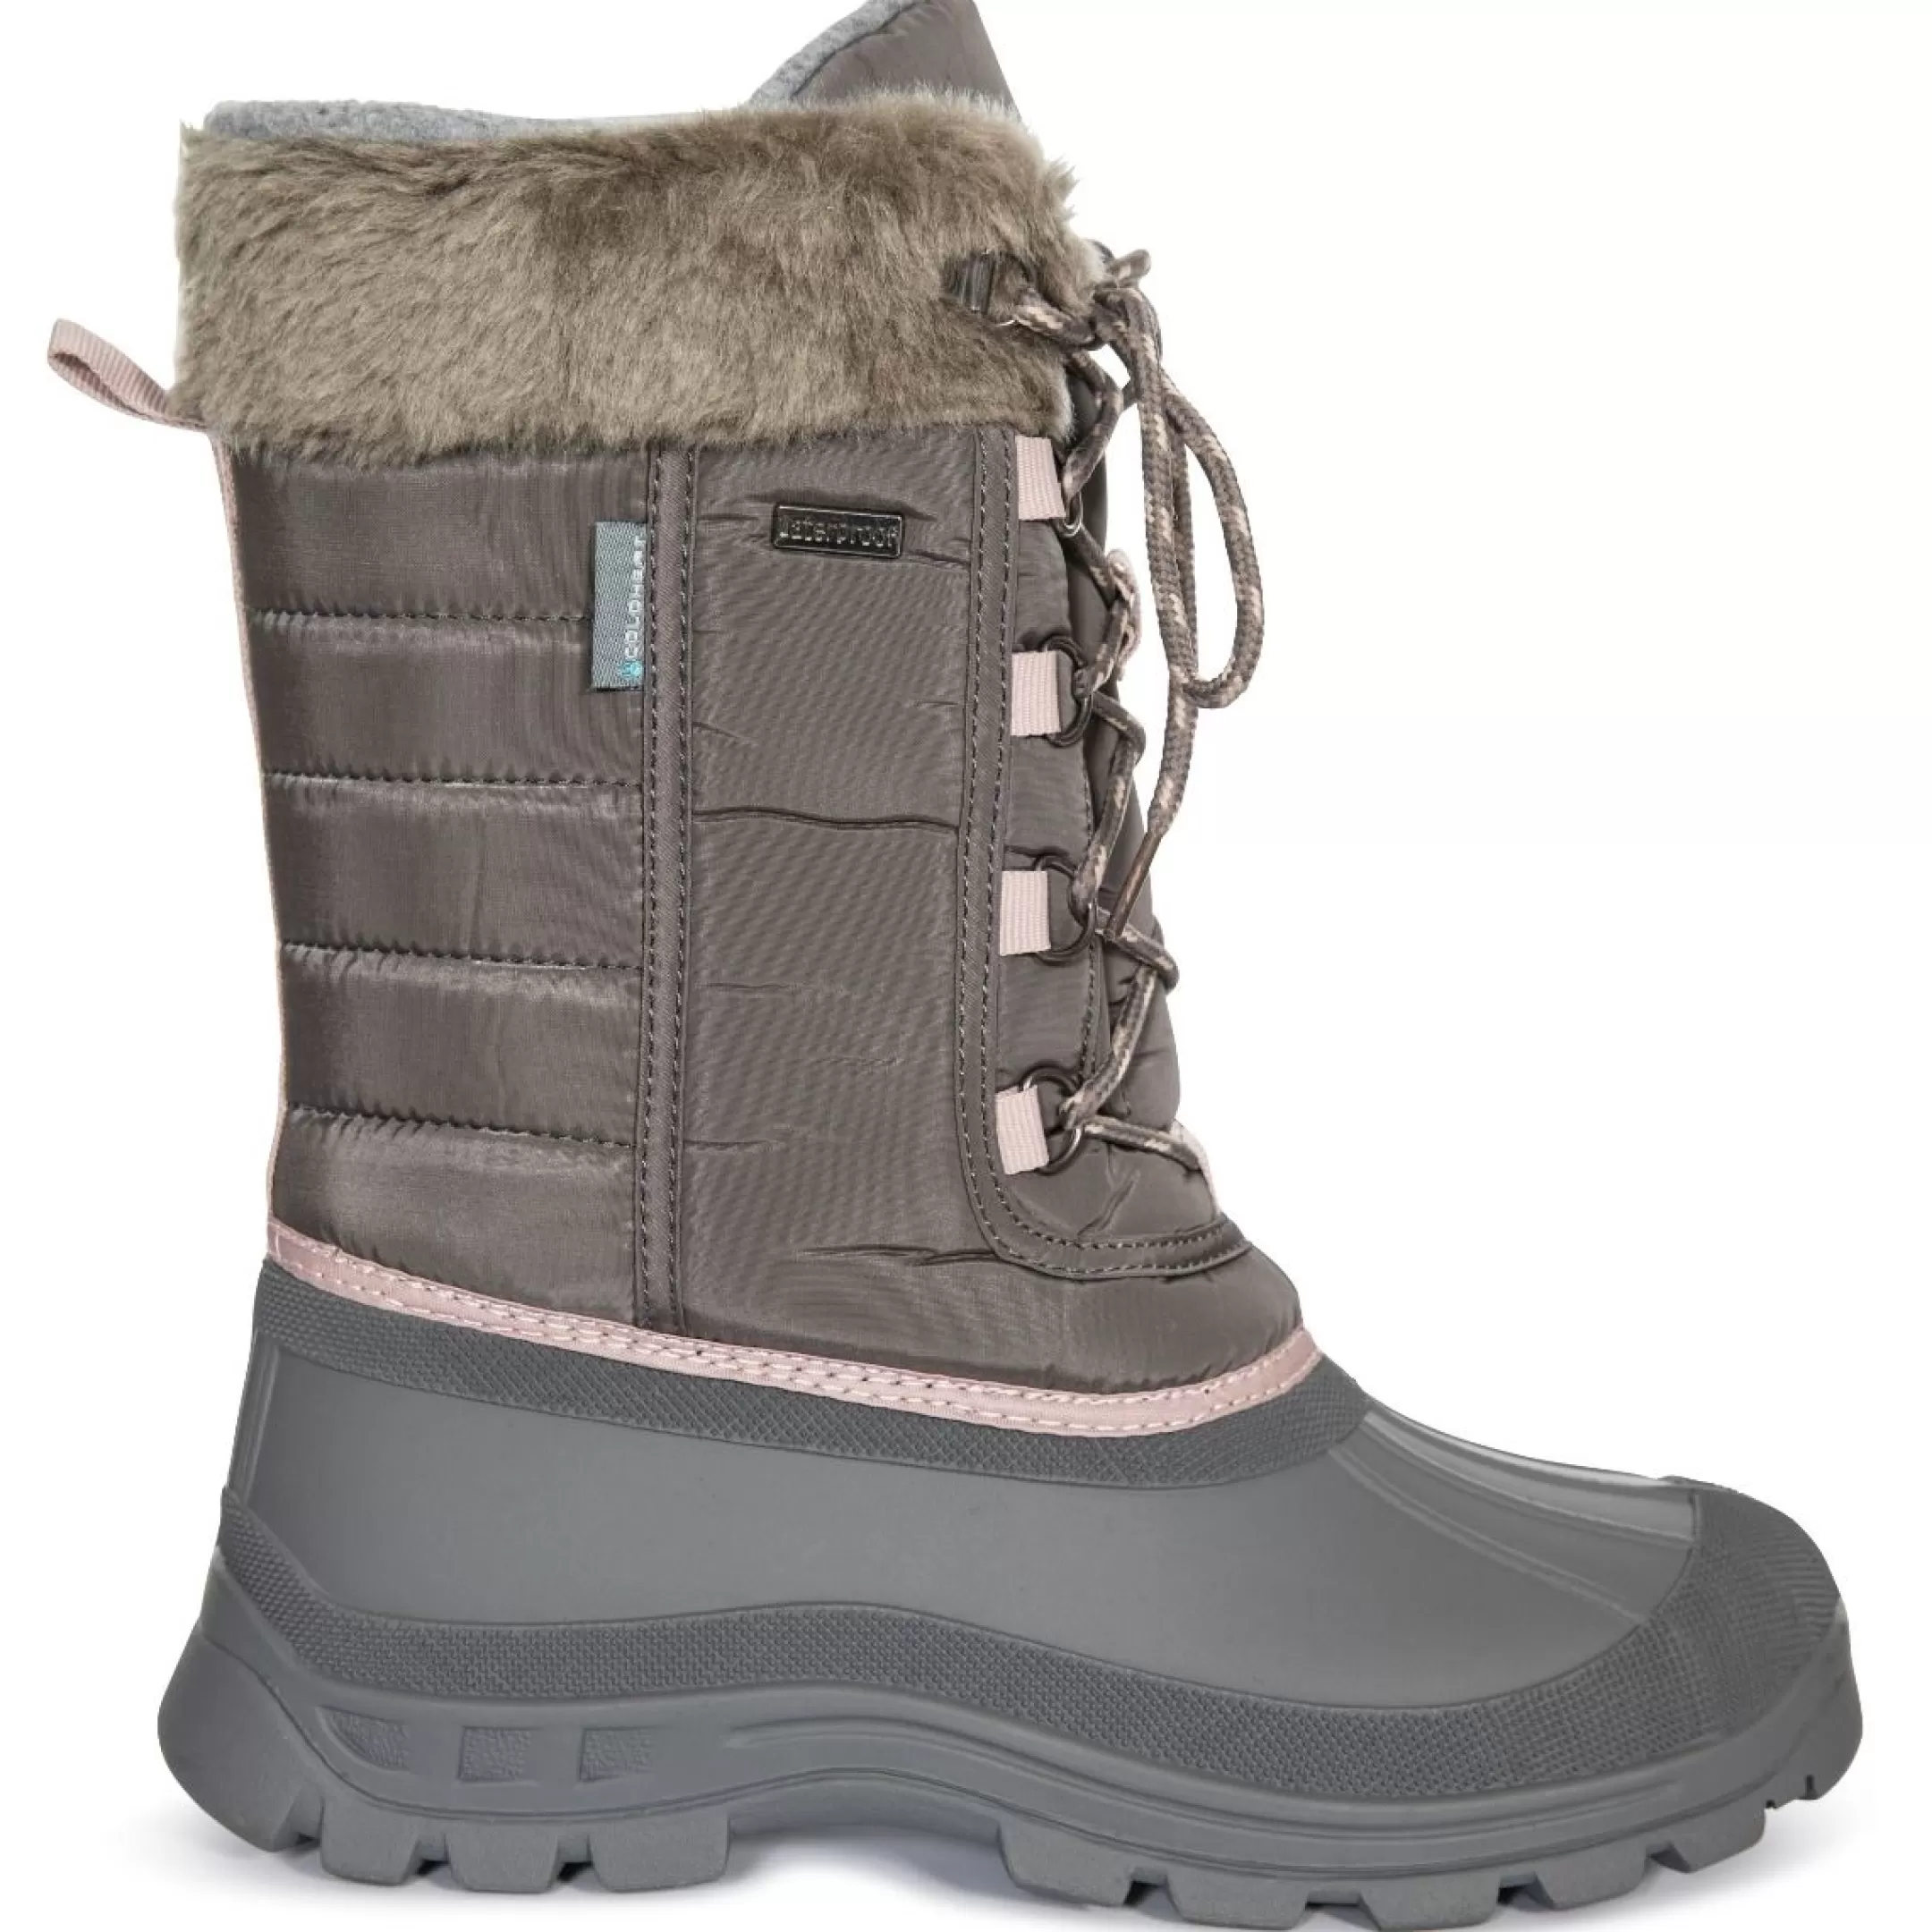 Womens Insulated Waterproof Snow Boots Stavra II | Trespass Store